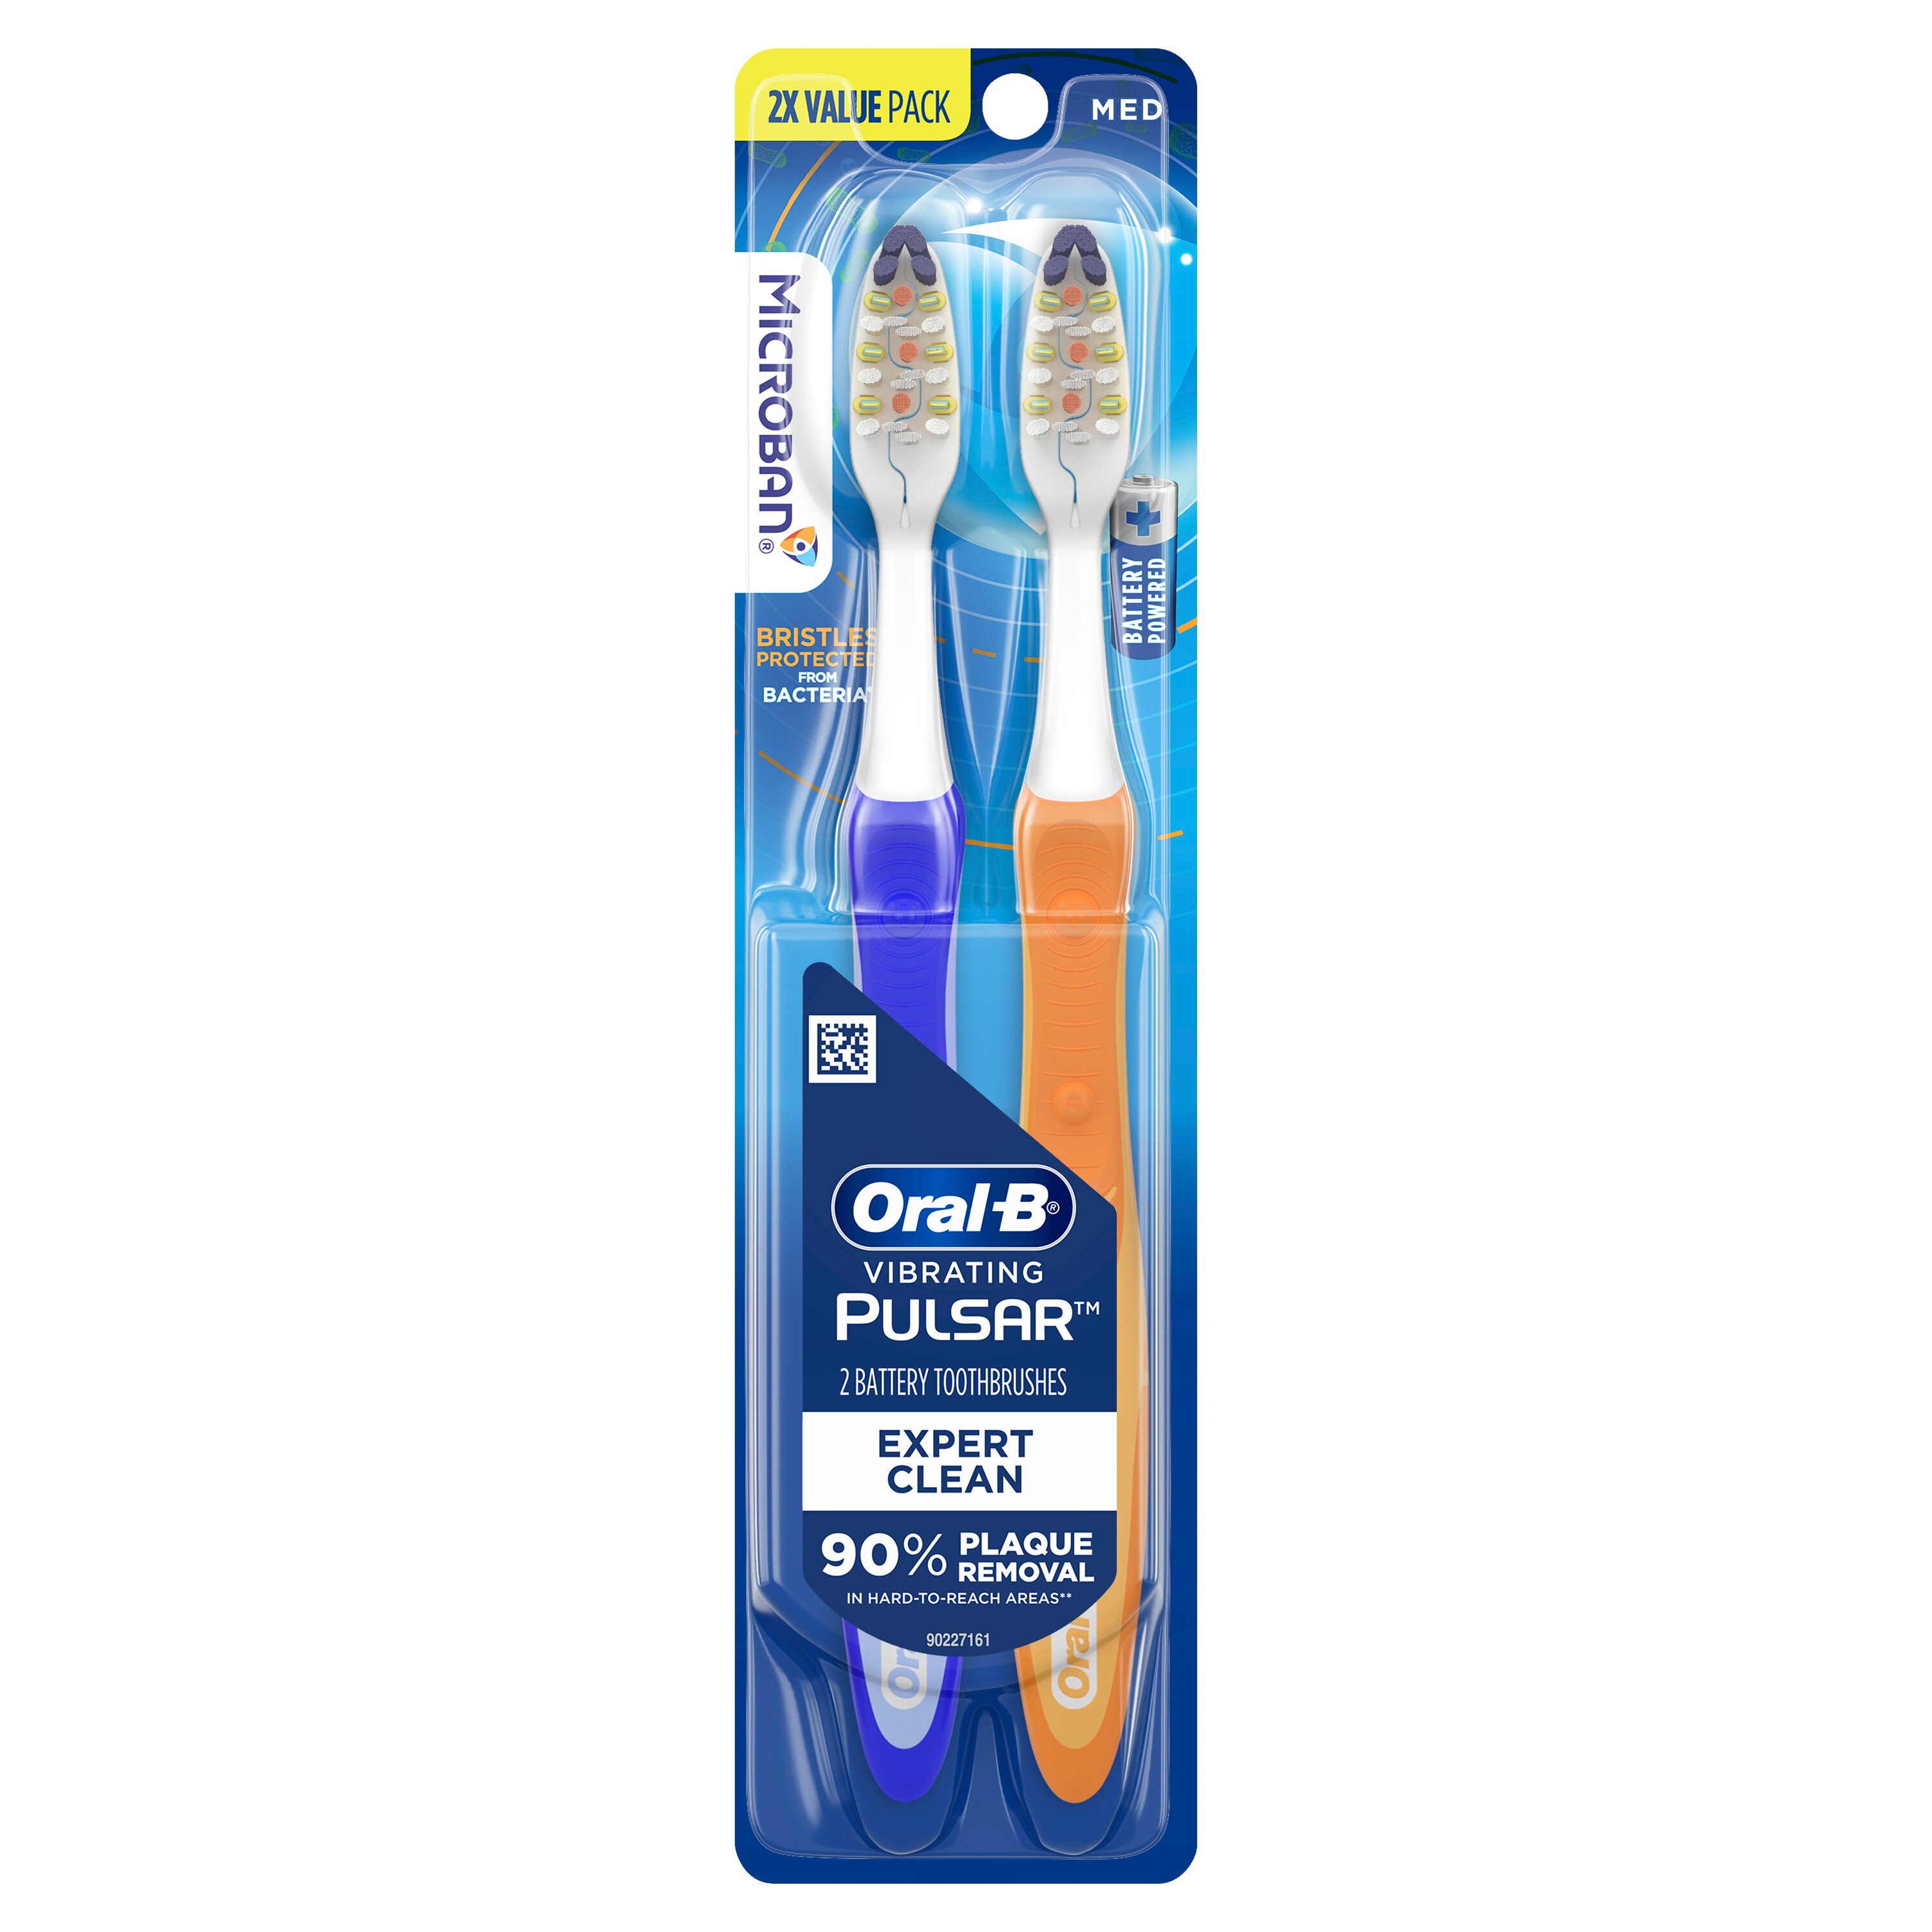 Oral-B Vibrating Pulsar Expert Clean Battery Toothbrush, Medium Bristle, 2 Pack - 2 Ct , CVS